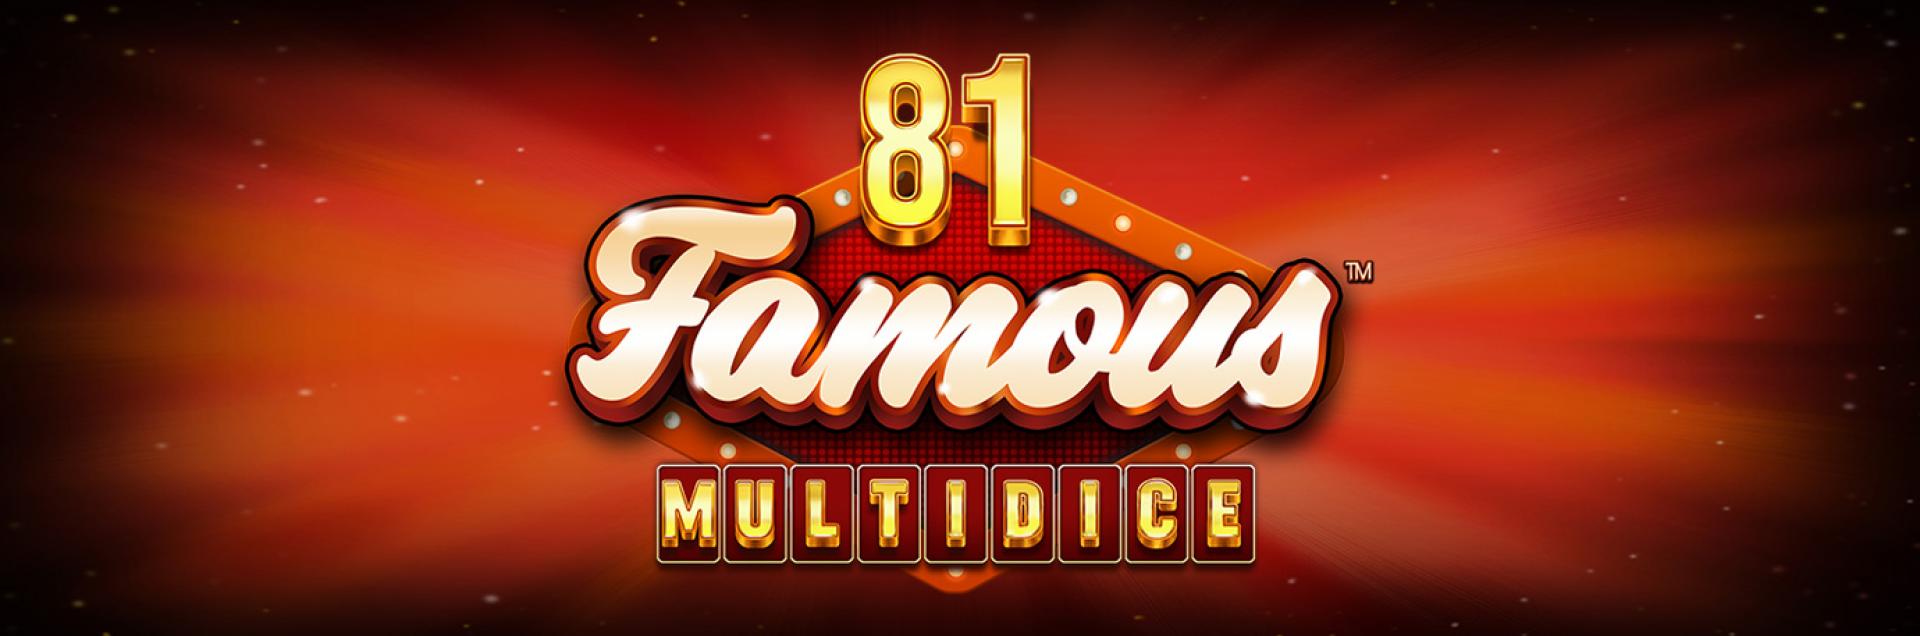 81 Famous MultiDice header news